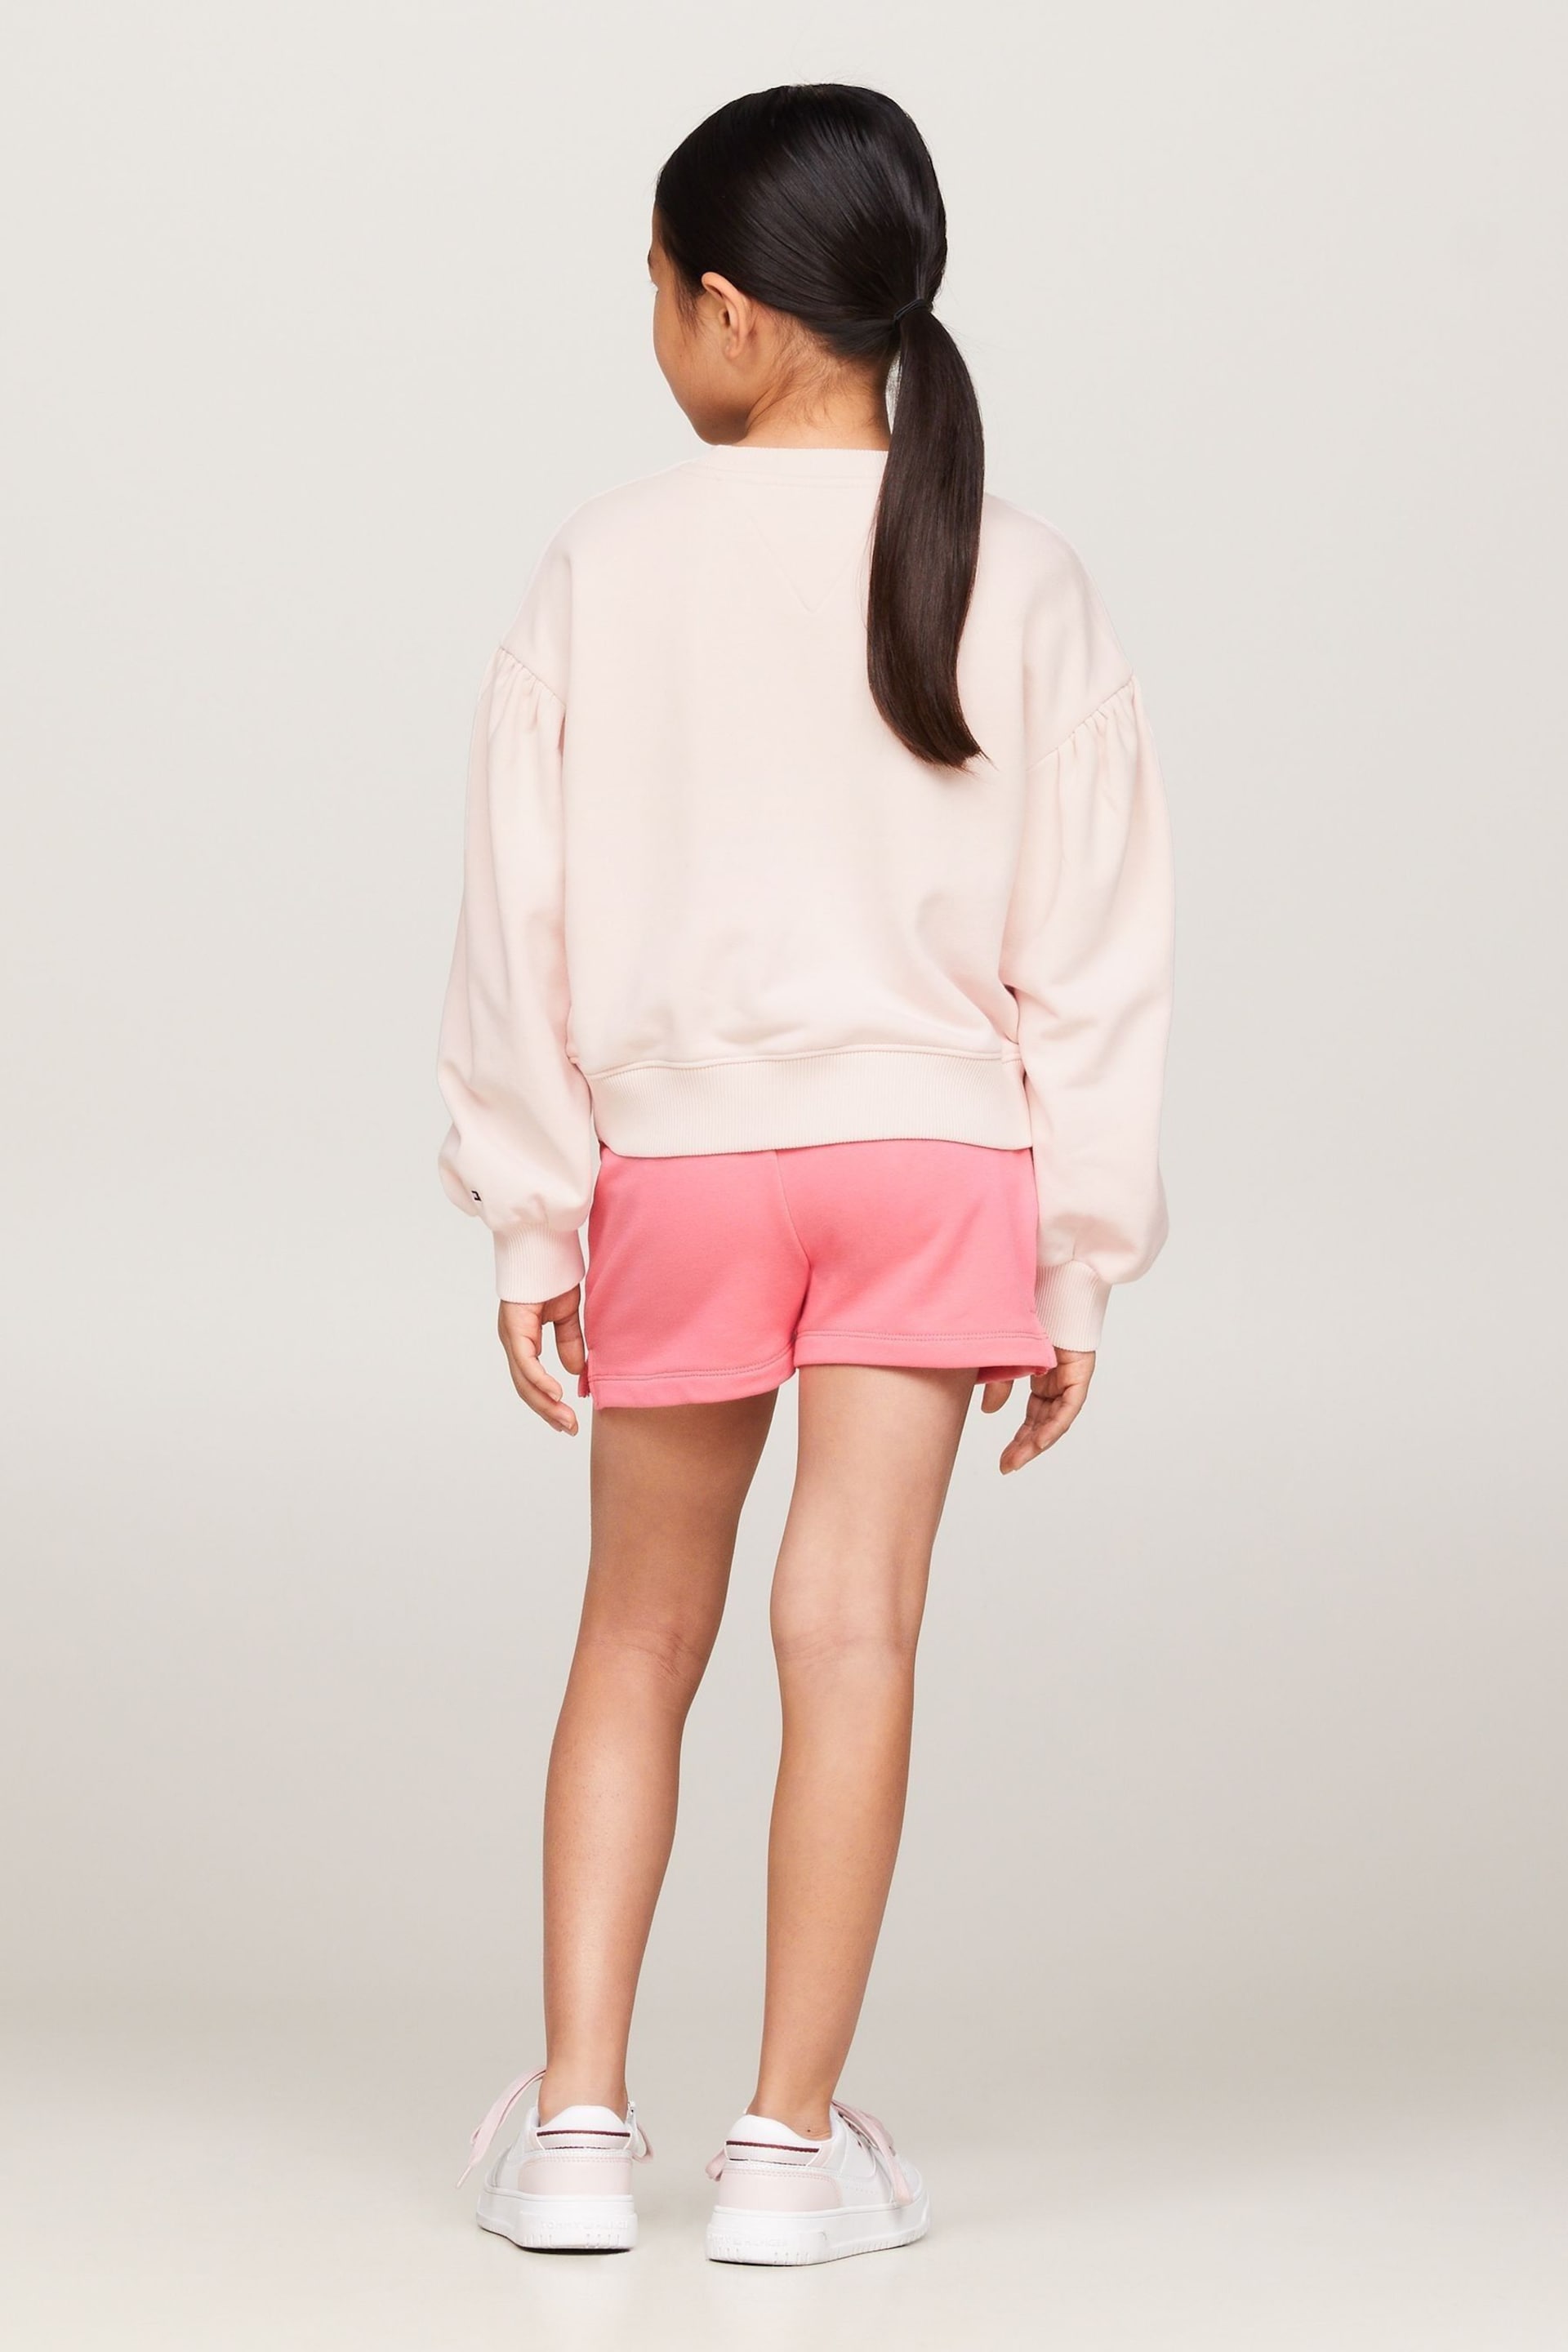 Tommy Hilfiger Pink Monotype Sweatshirt - Image 2 of 6